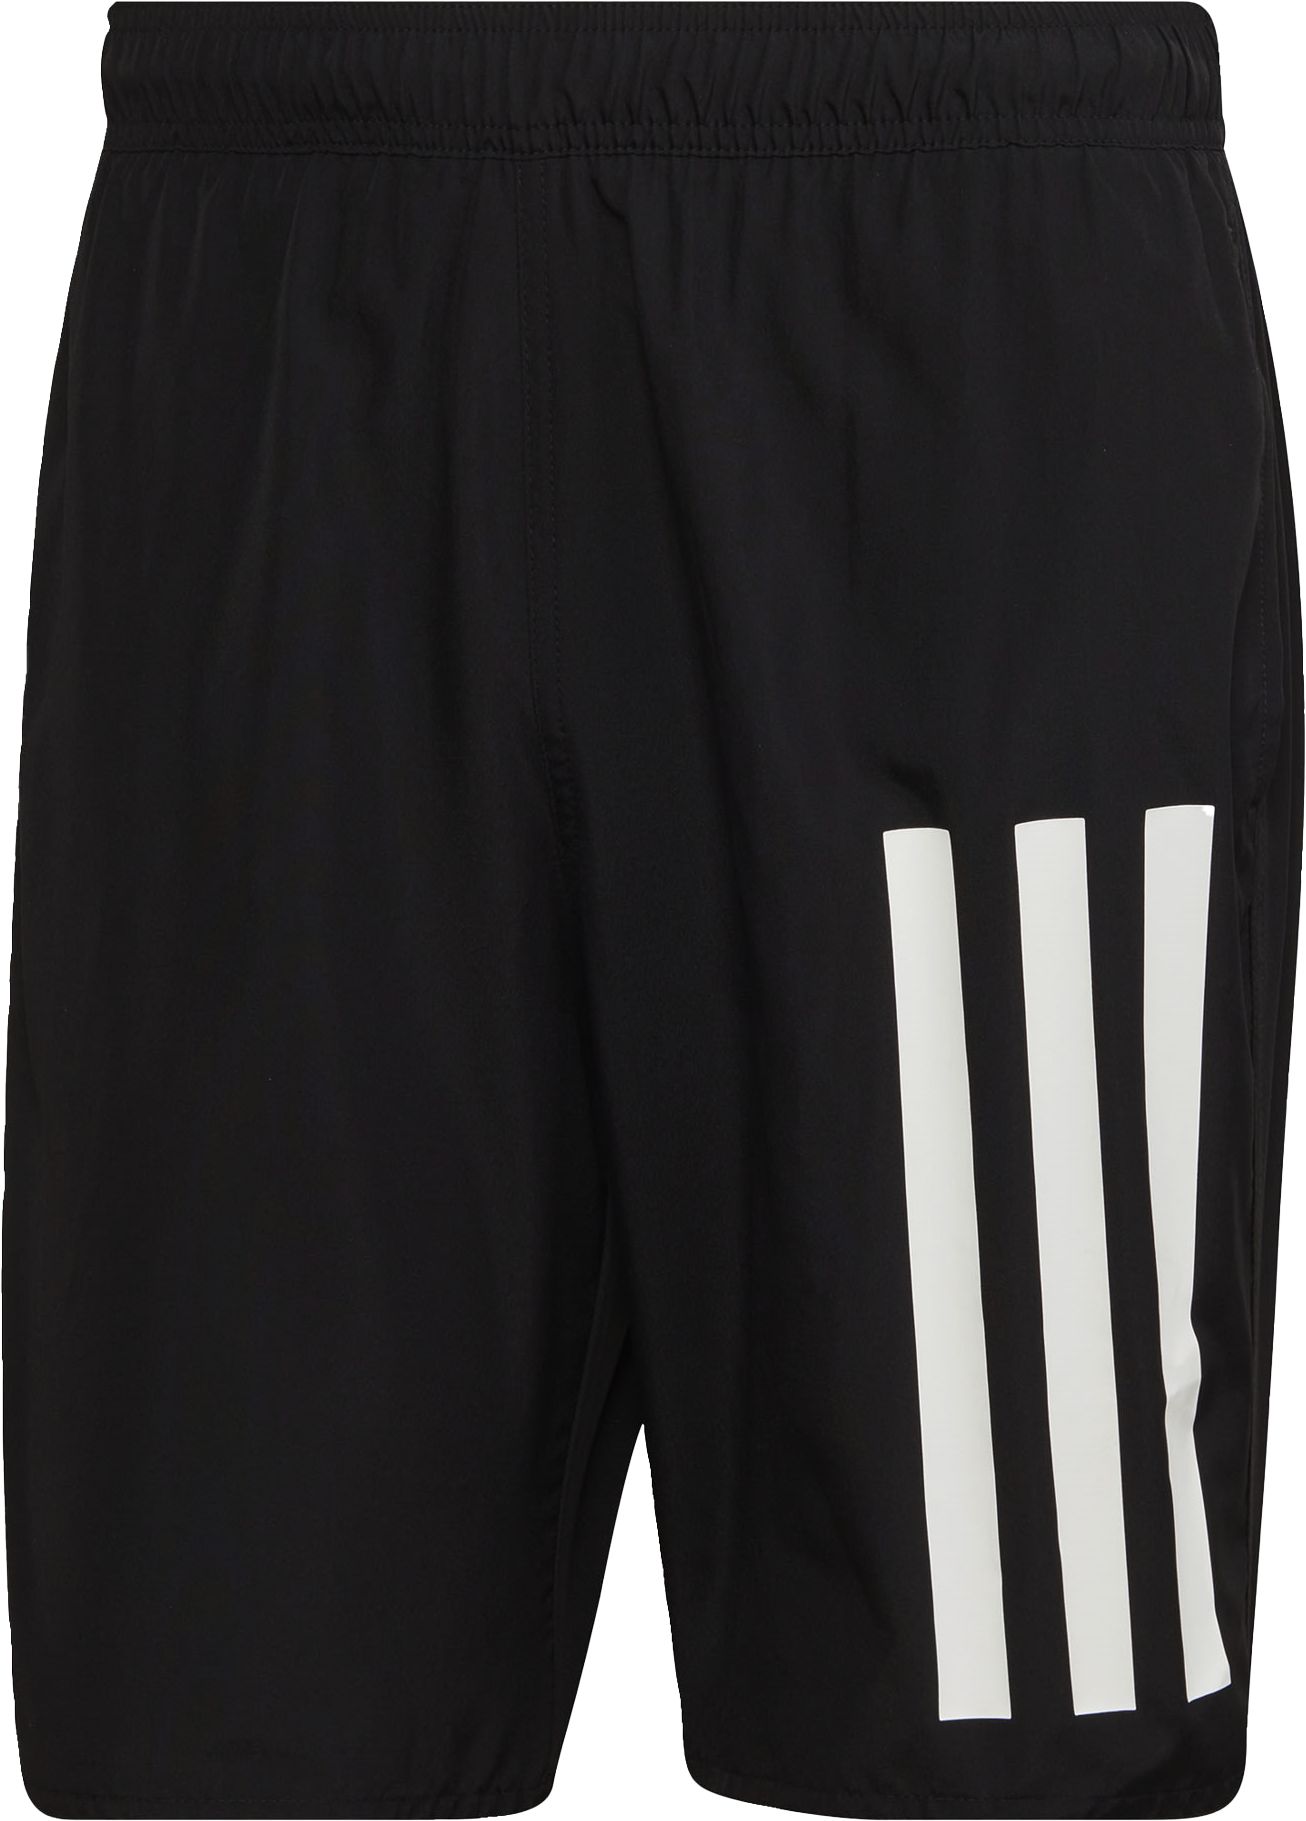 ADIDAS, Classic Length 3-Stripes Swim Shorts